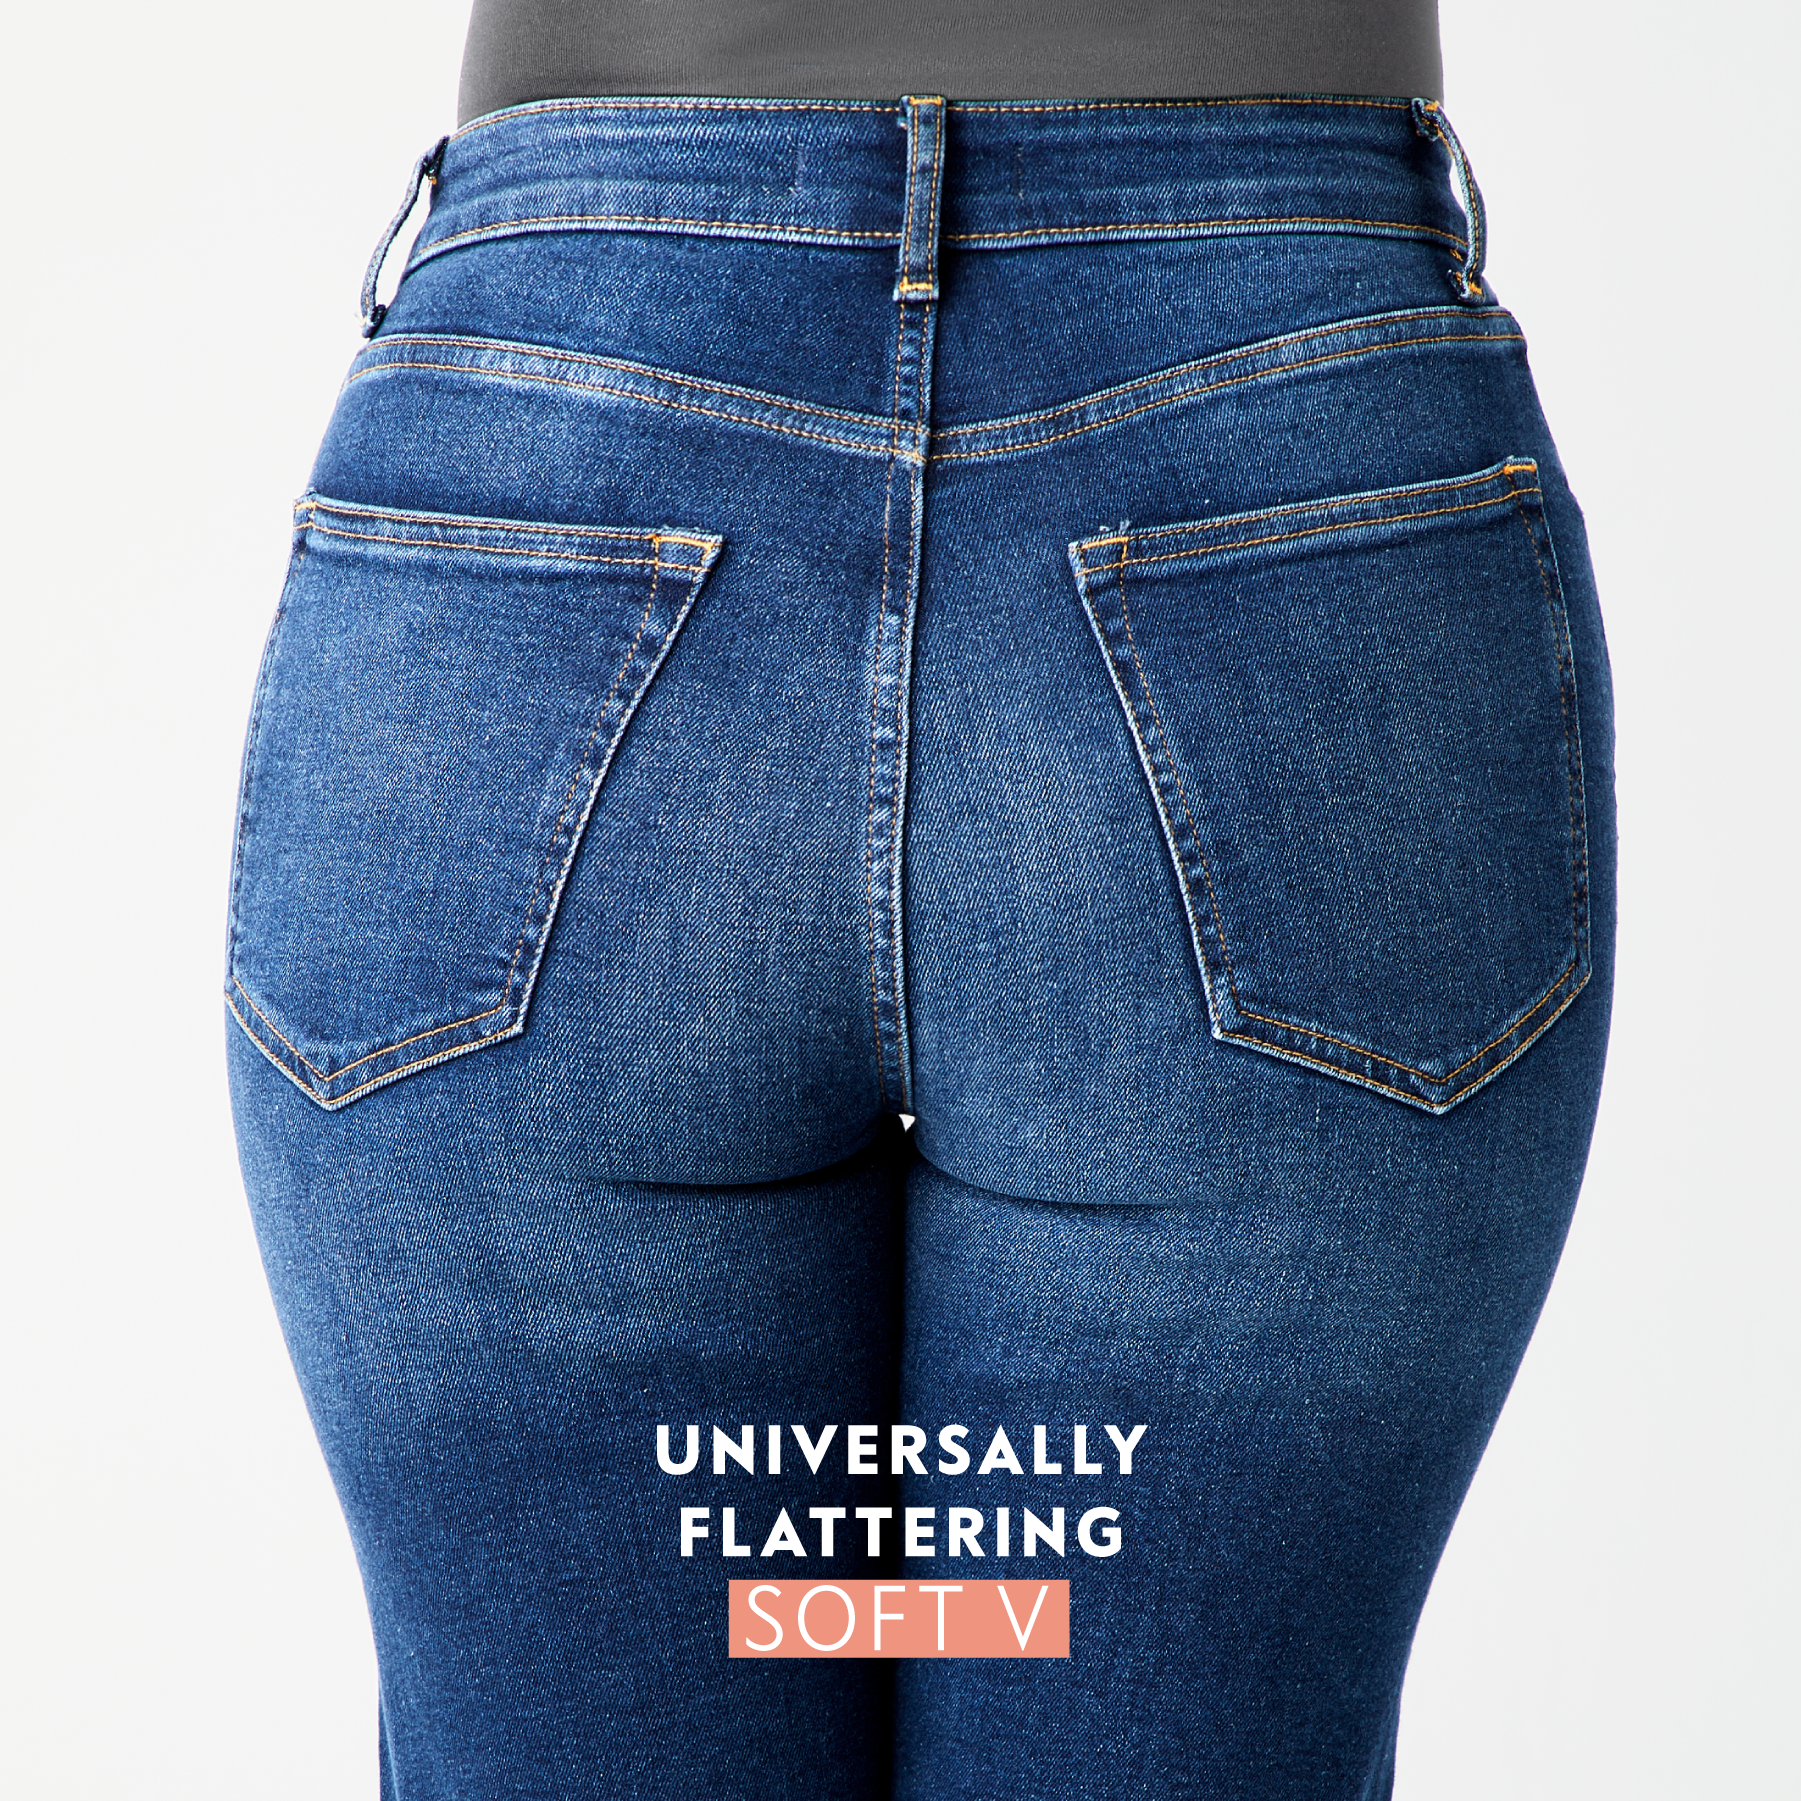 jeans that shape your bum